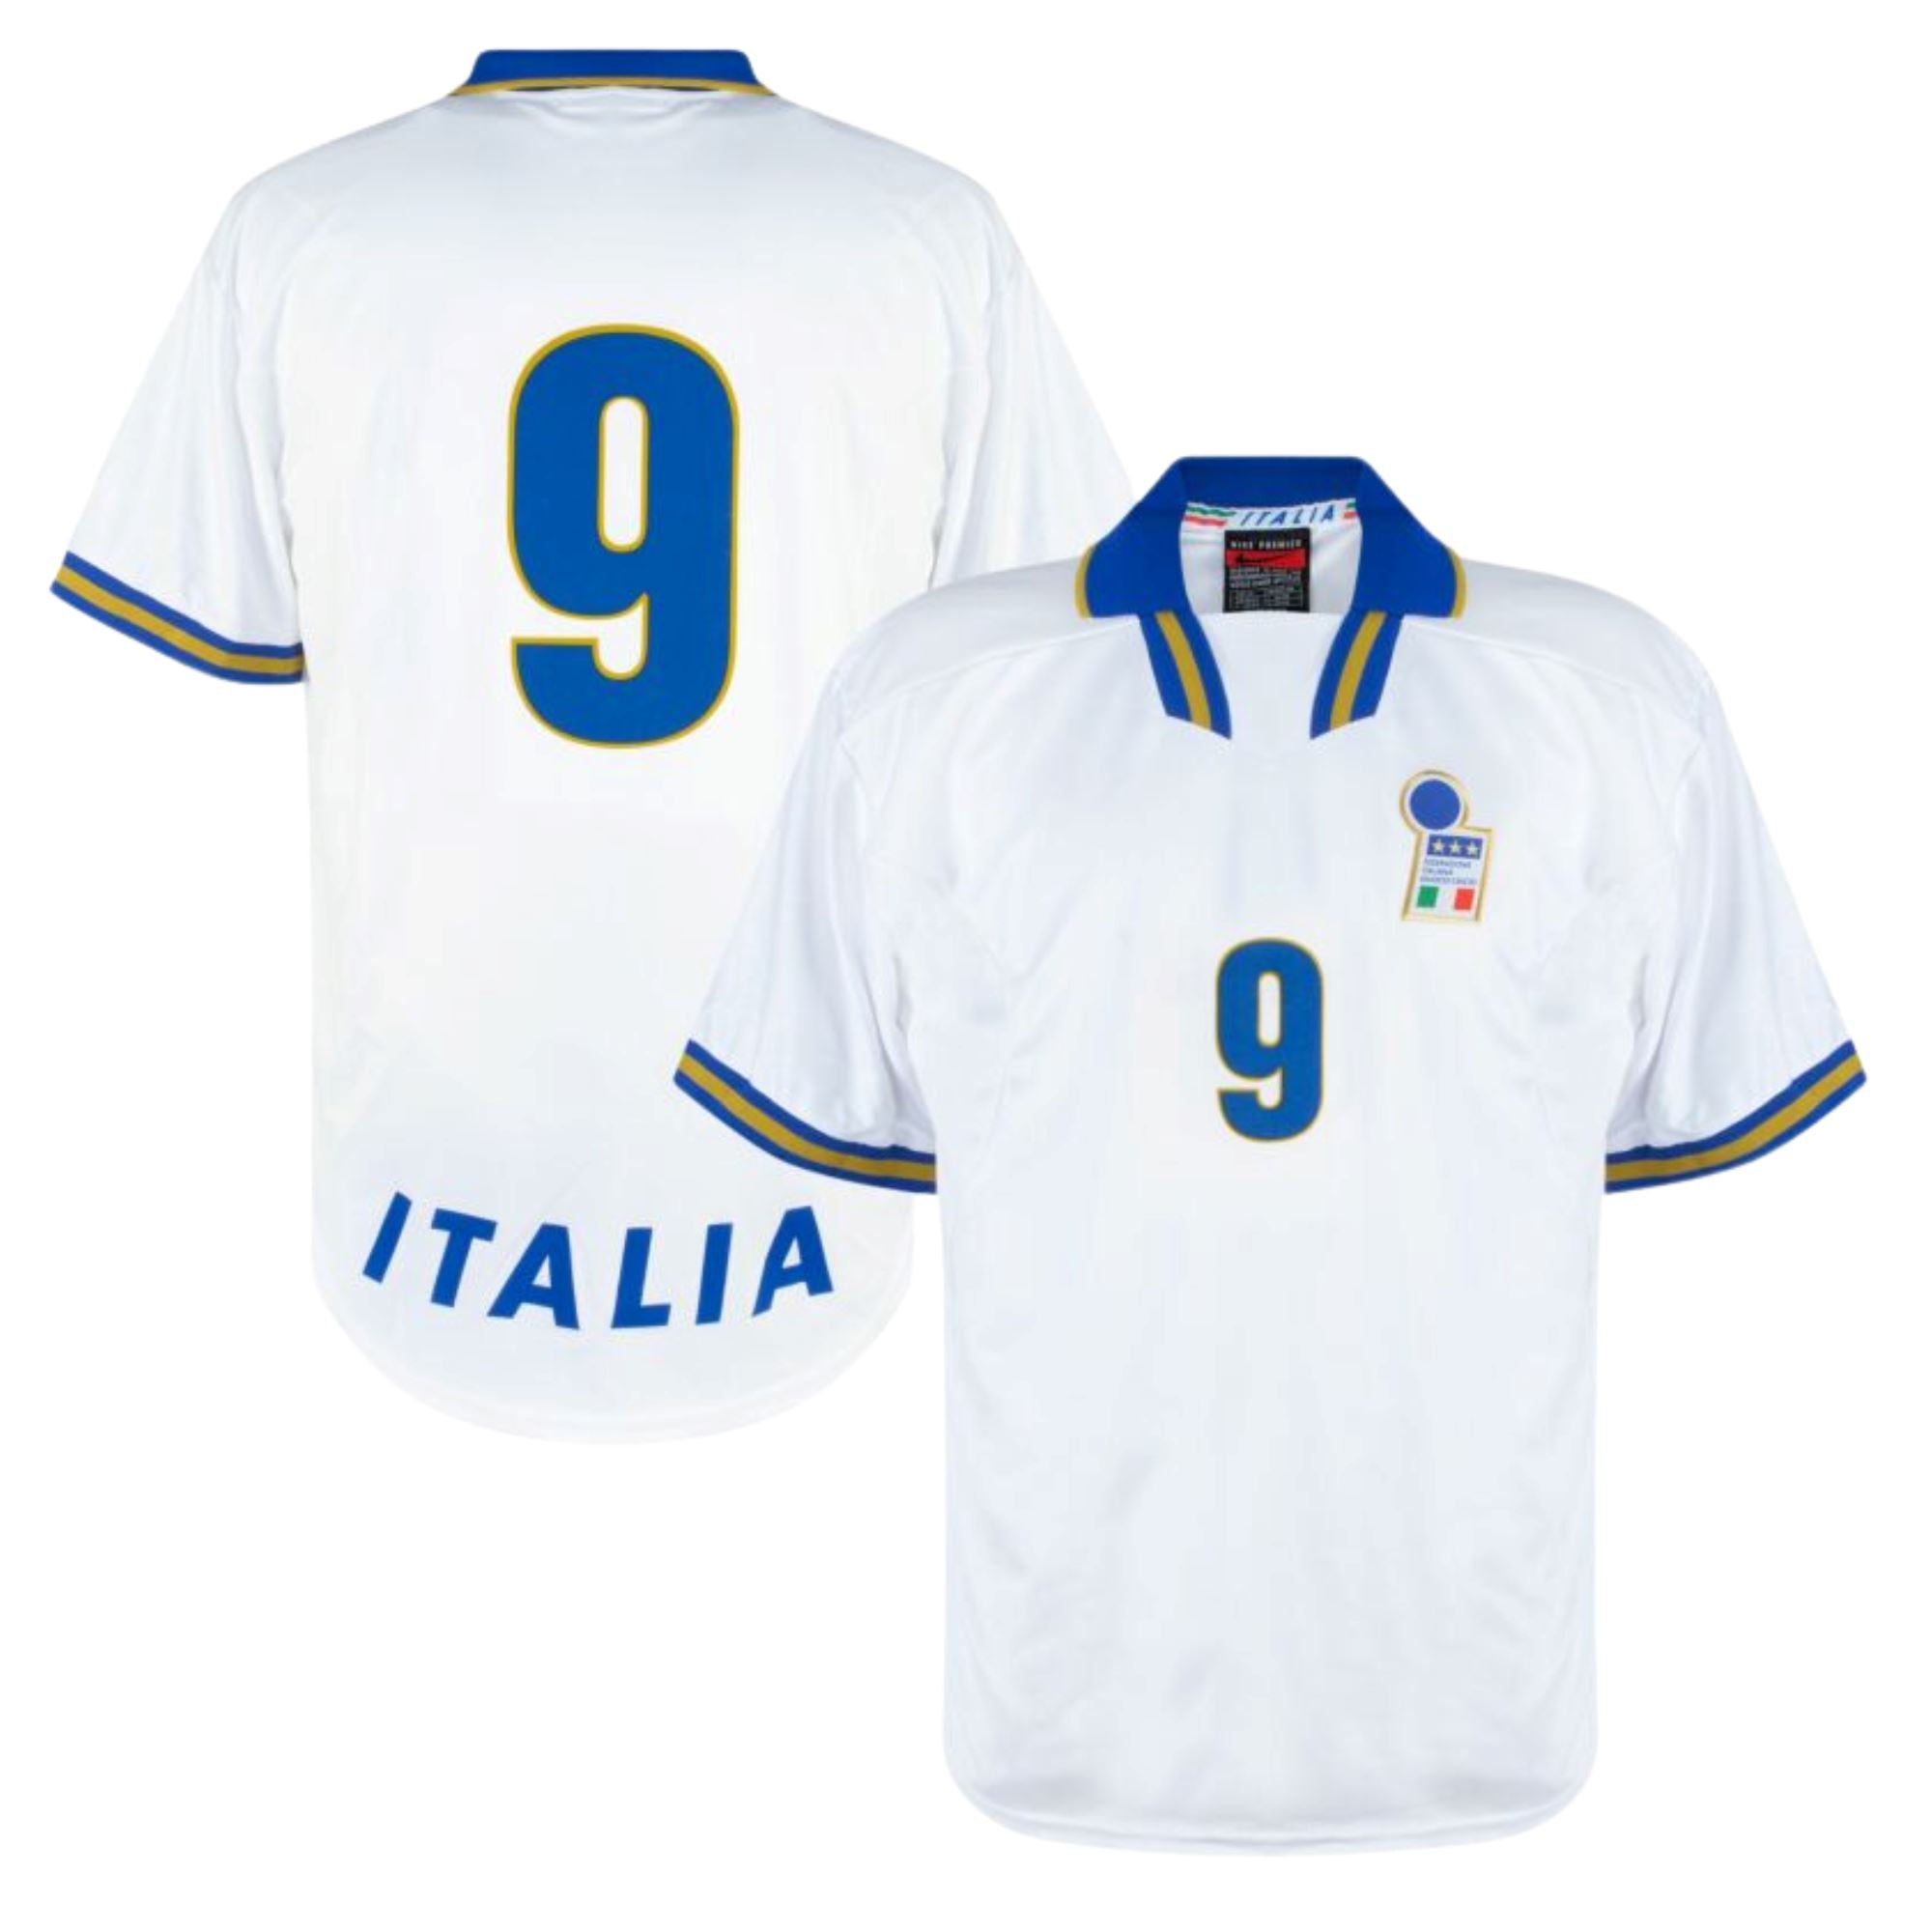 1996/97 Italy Away Jersey - ITASPORT